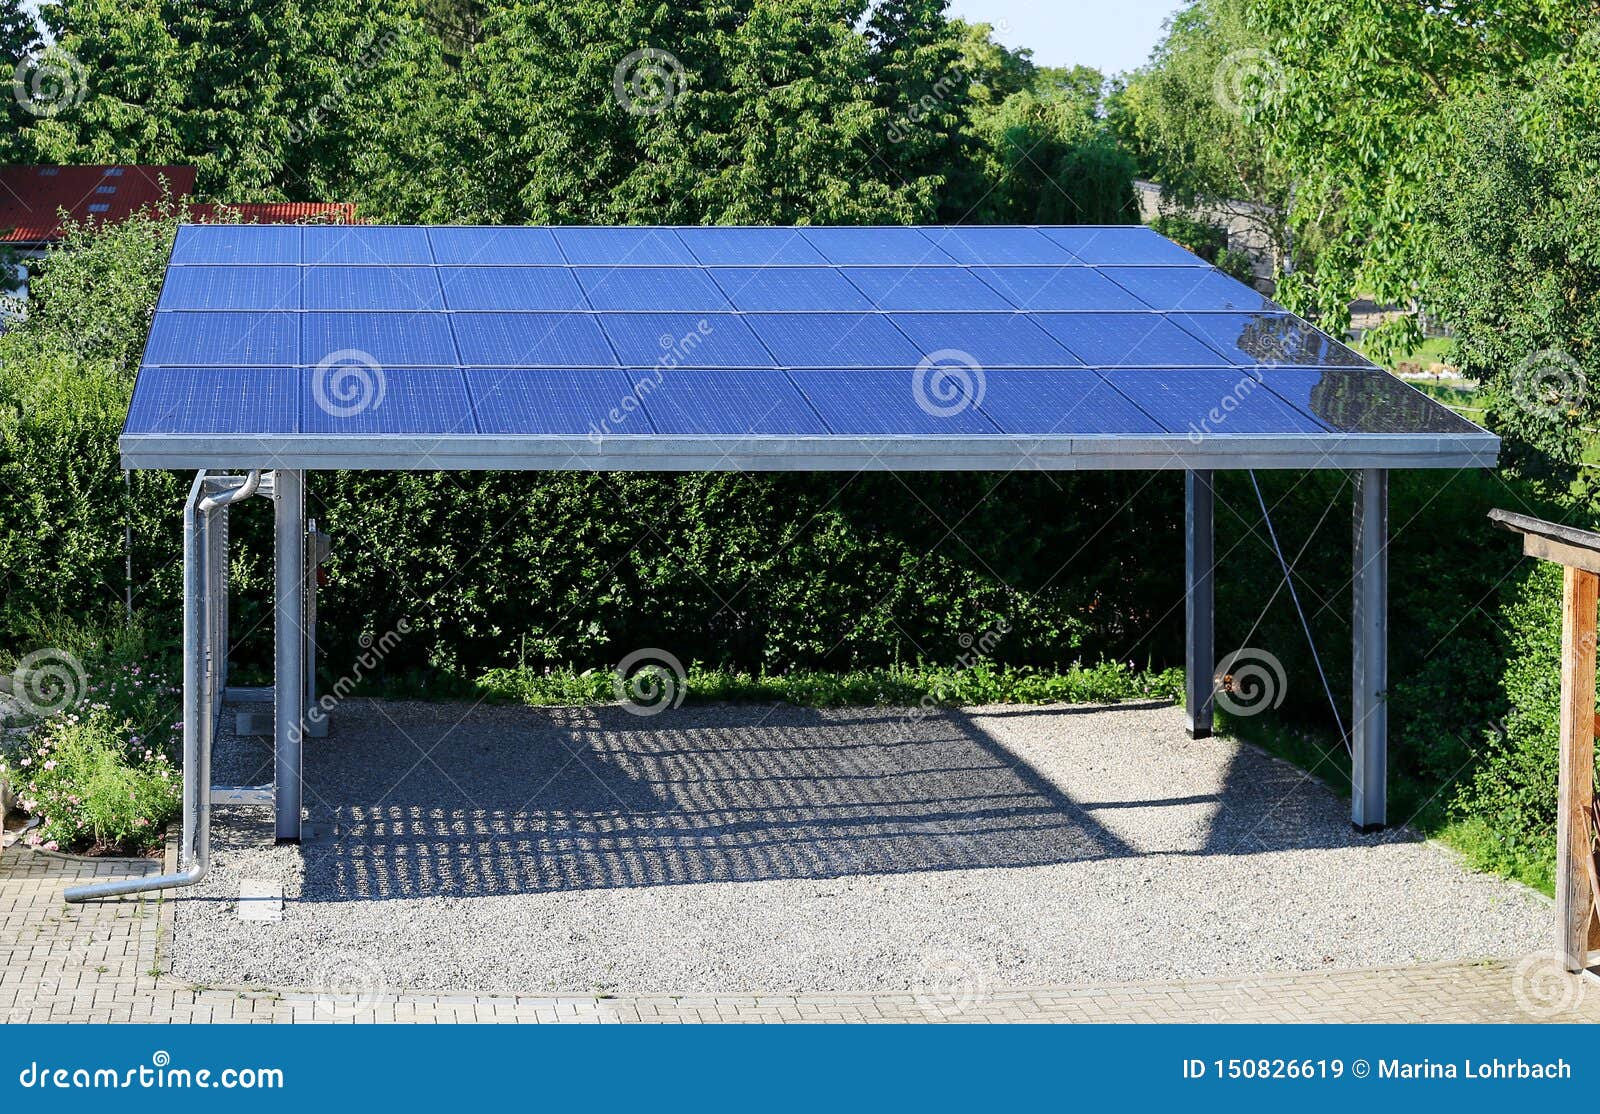 New Carport With Semi Transparent Photovoltaik Moduls Stock Image Image Of Building Alternative 150826619